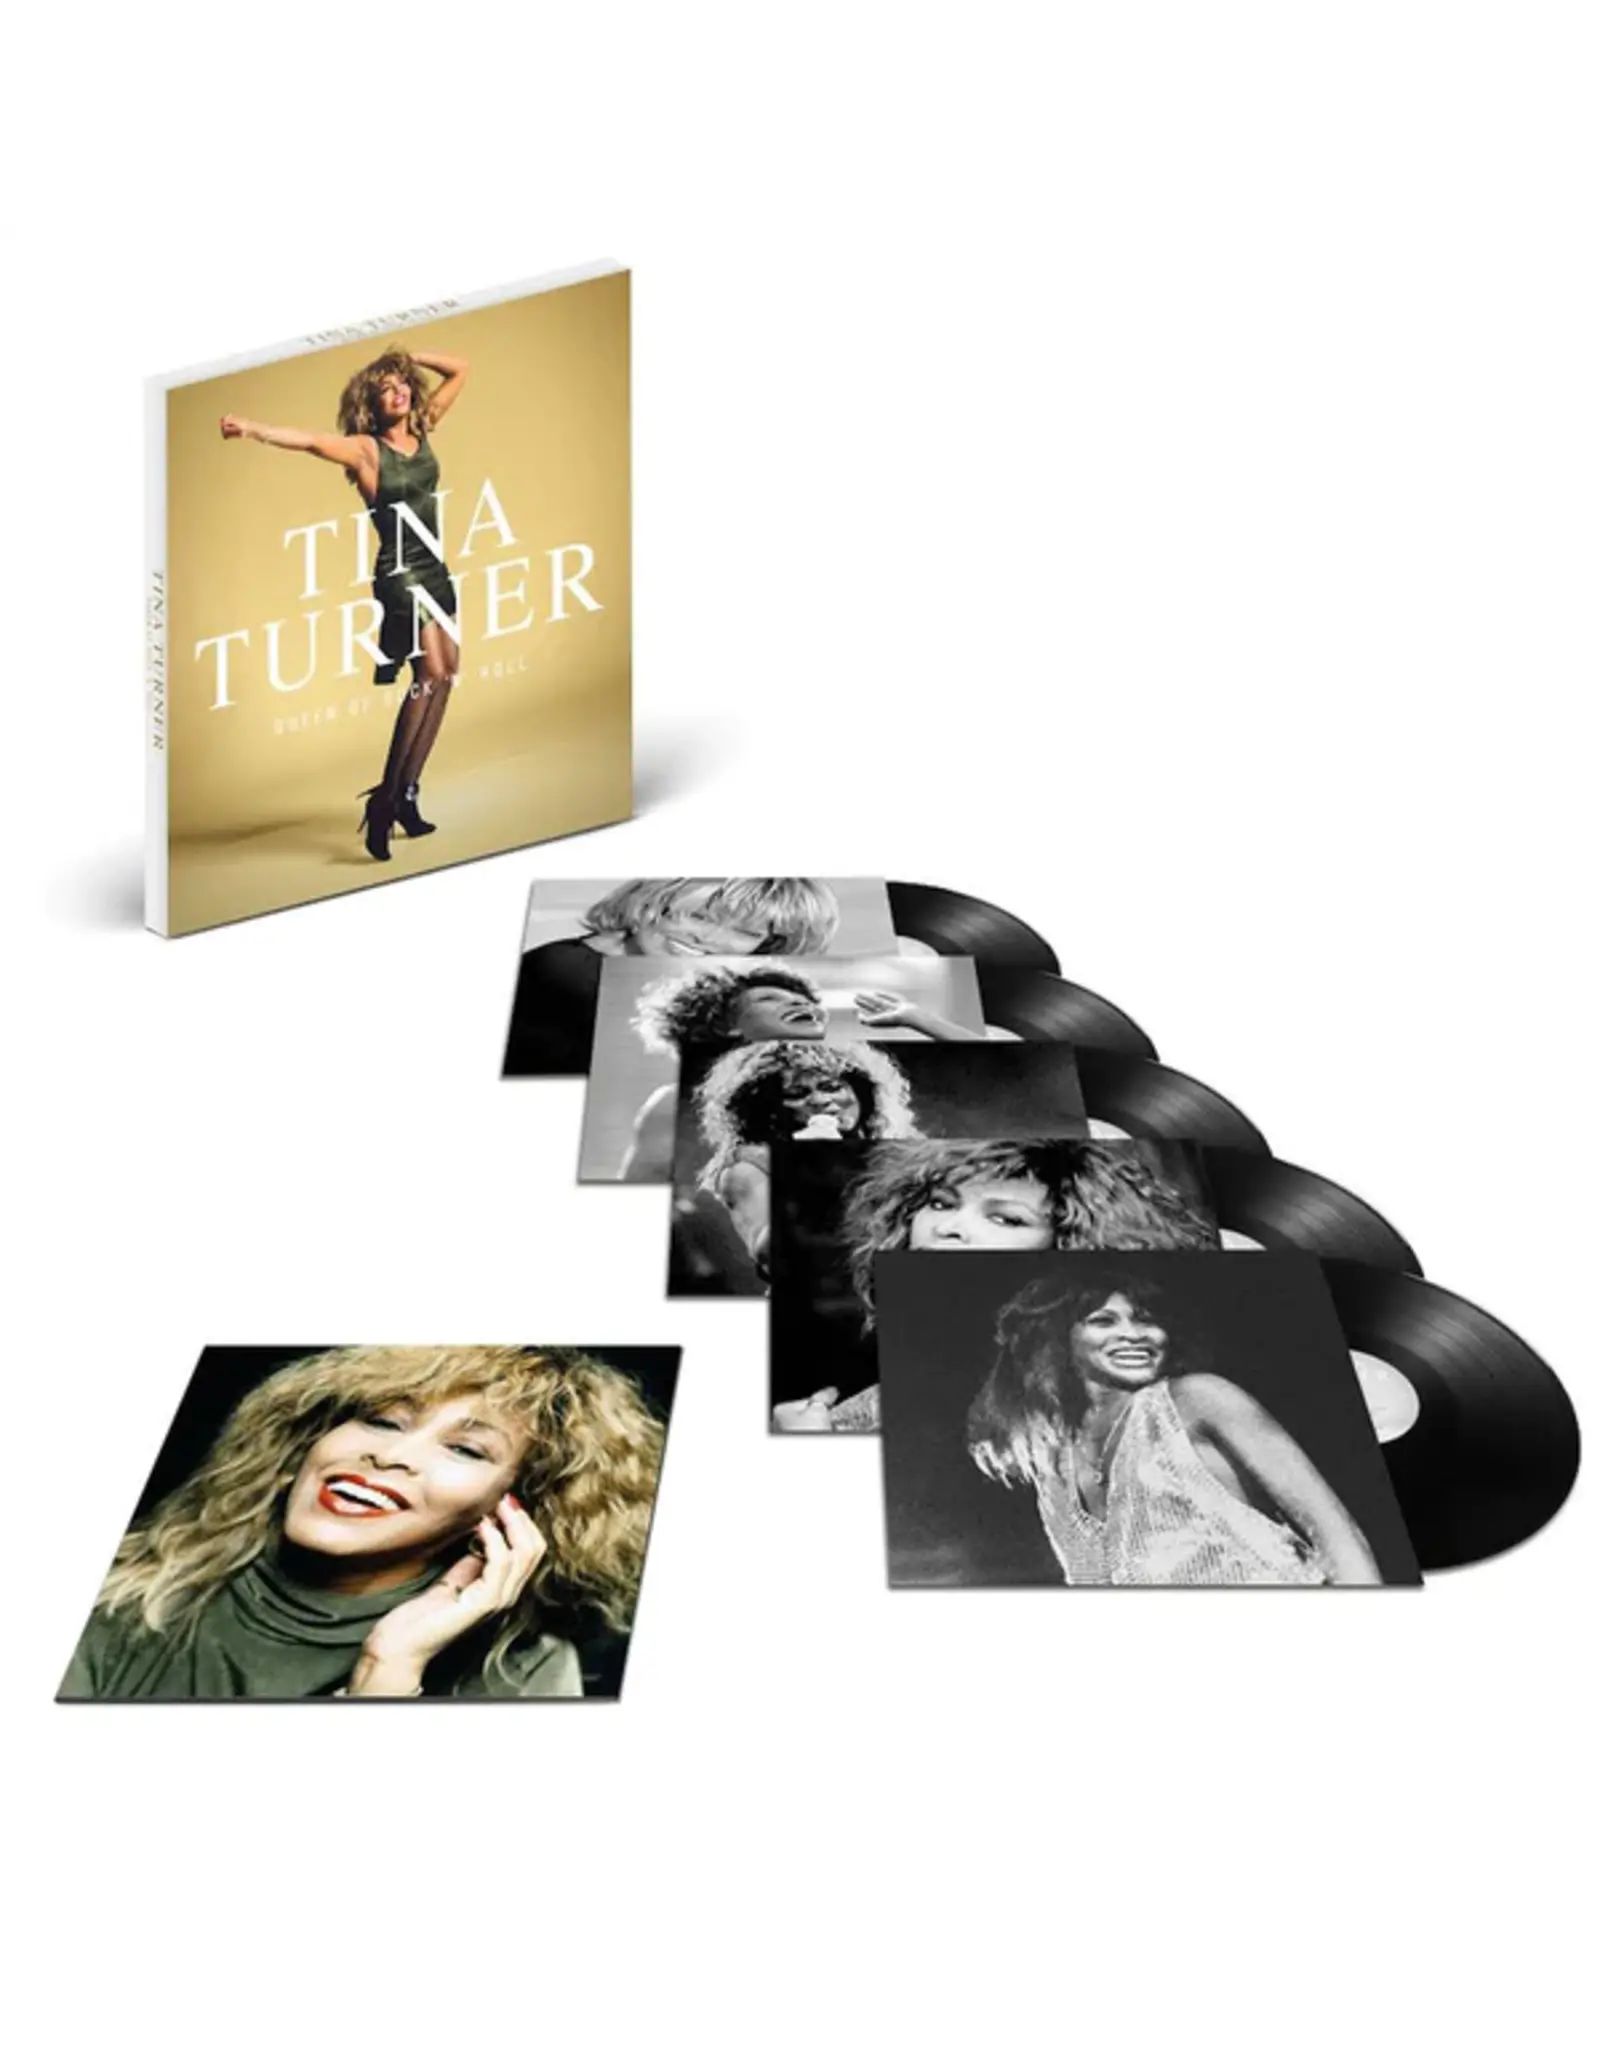 Tina Turner - Queen of Rock 'N' Roll (5LP)